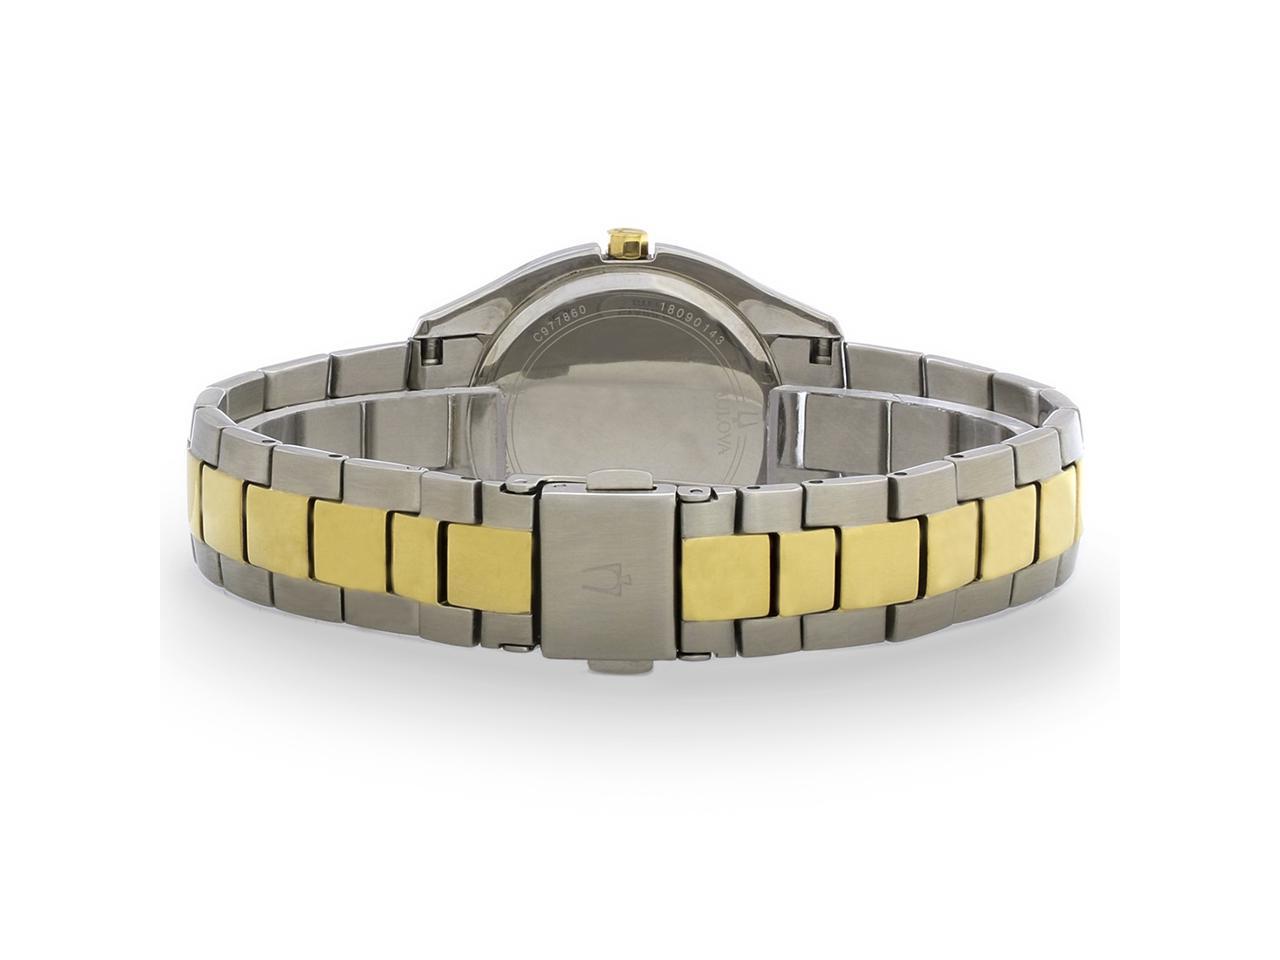 Bulova Diamond Ladies Gold Tone Stainless Steel Quartz Watch 98P145